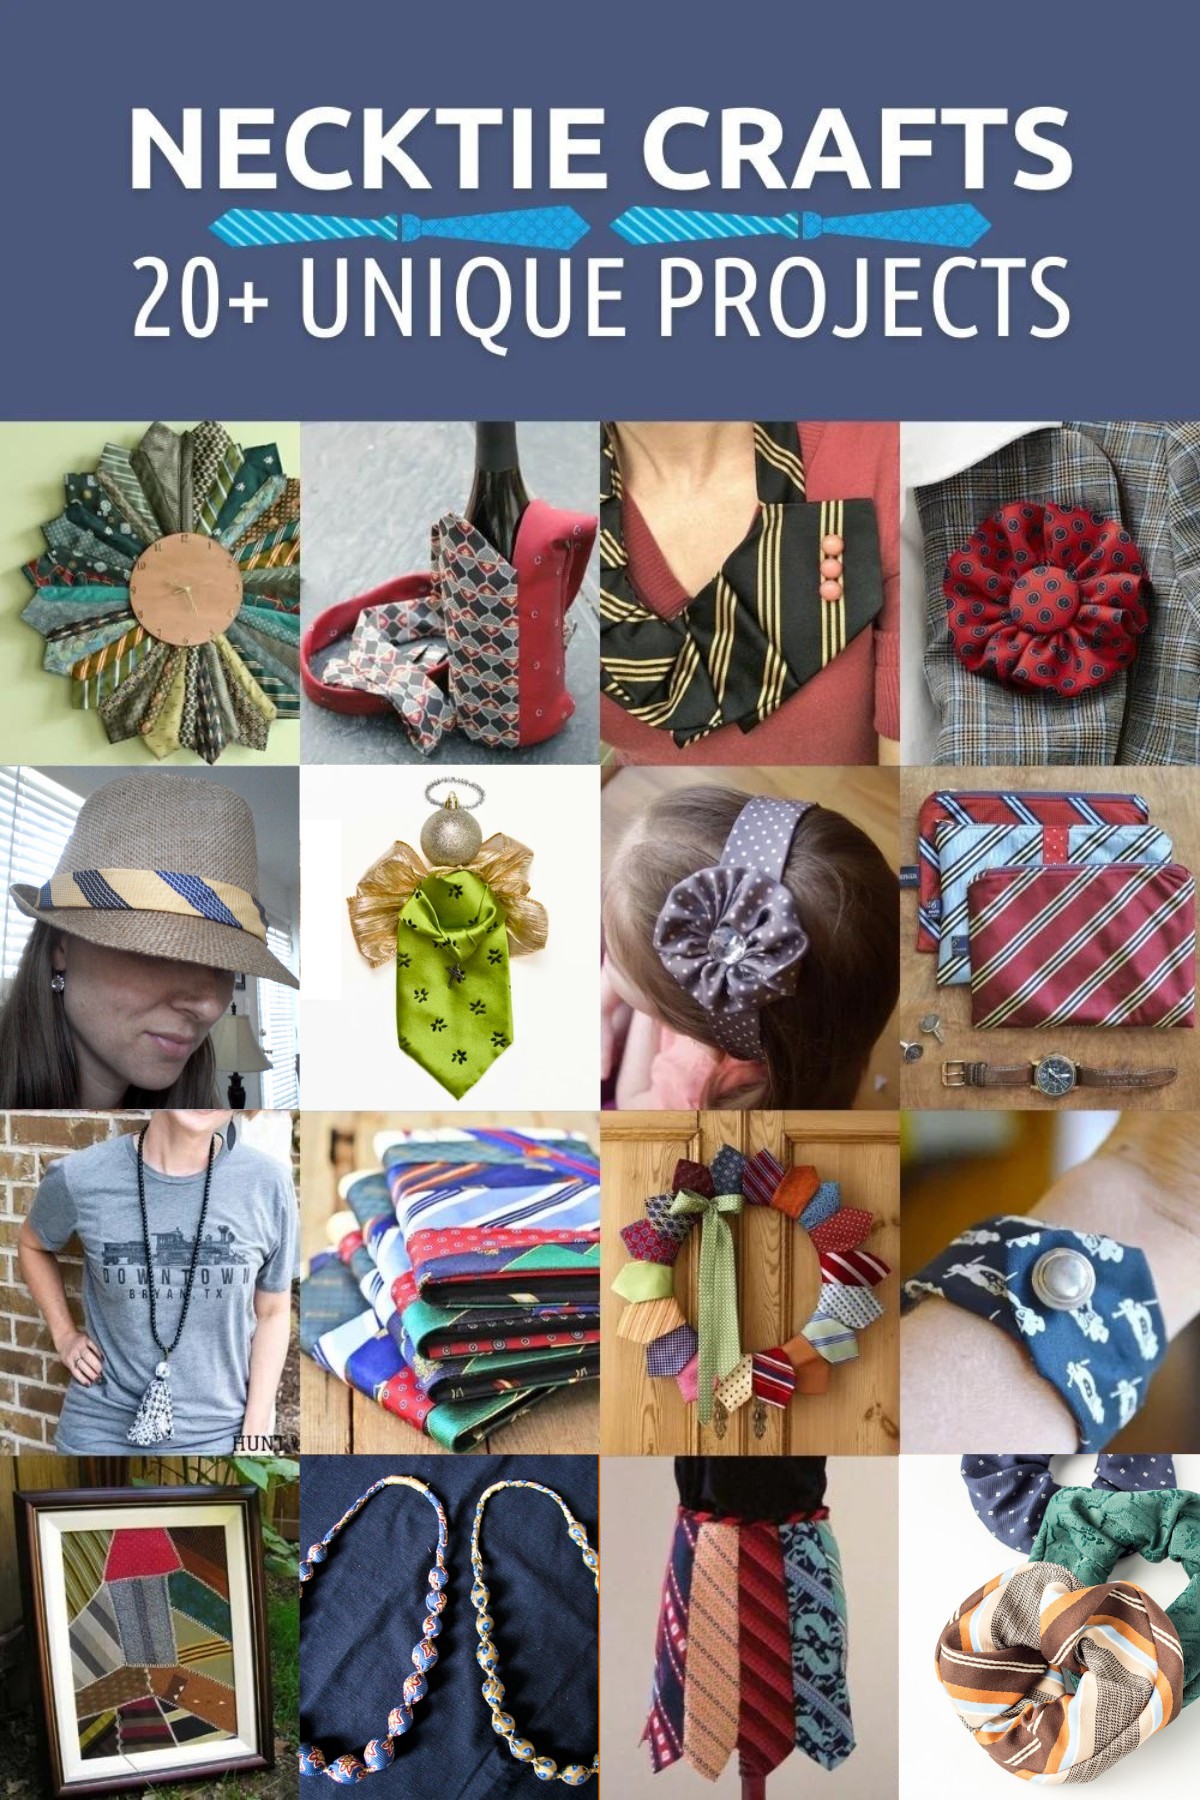 Unique crafts made using neckties